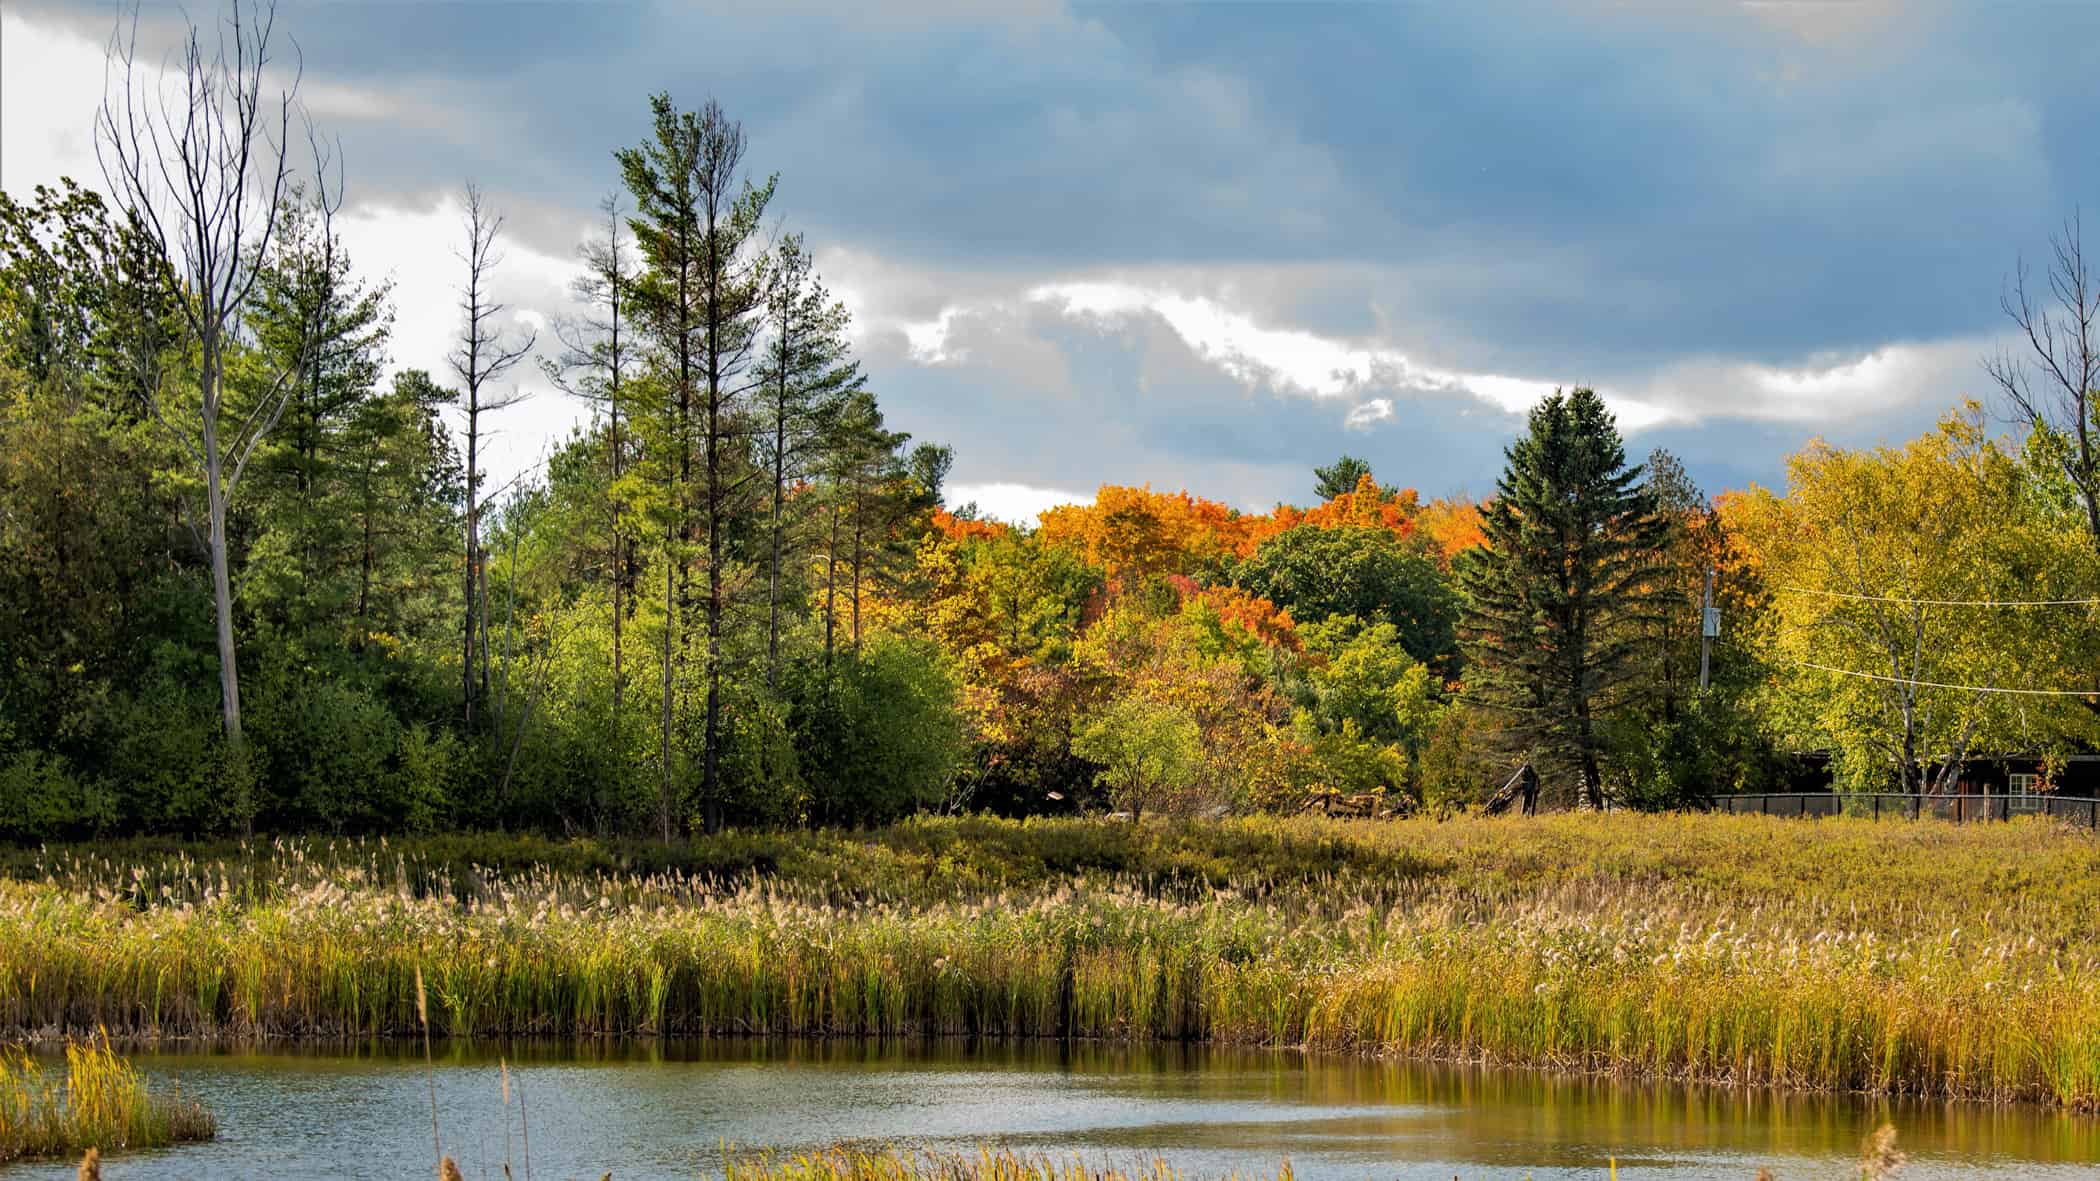 Ontario wetland - fall